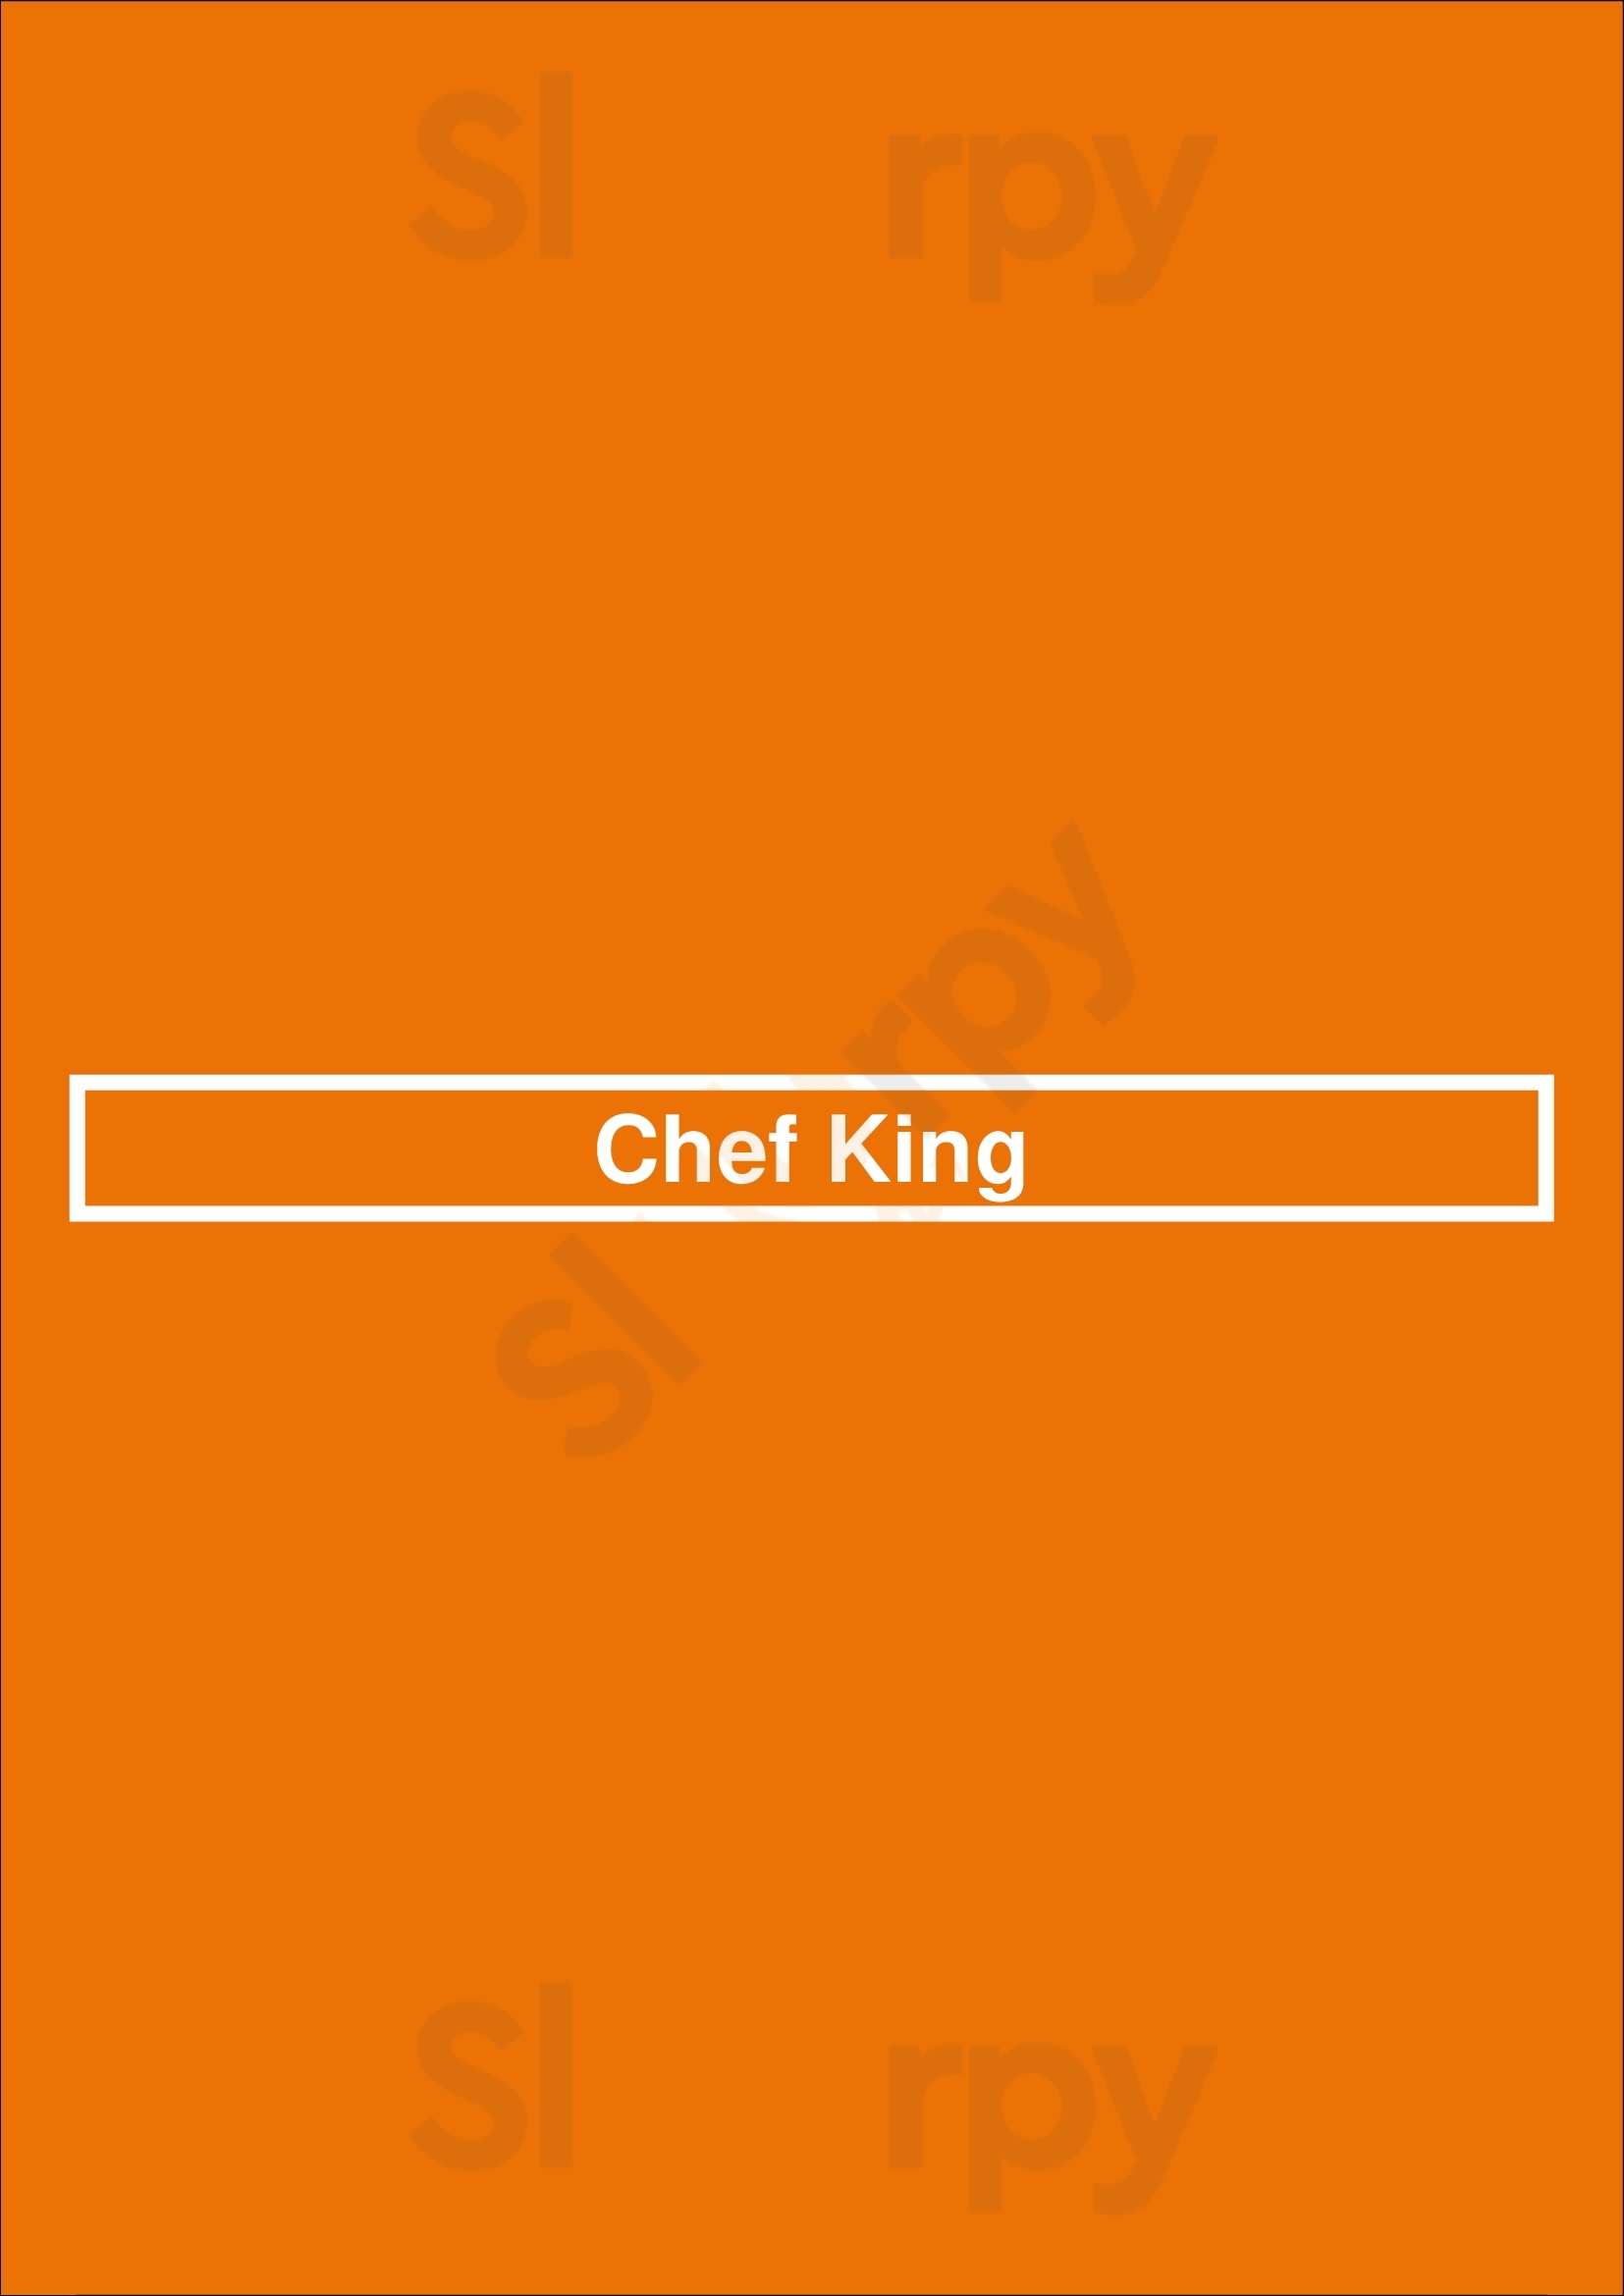 Chef King Seattle Menu - 1